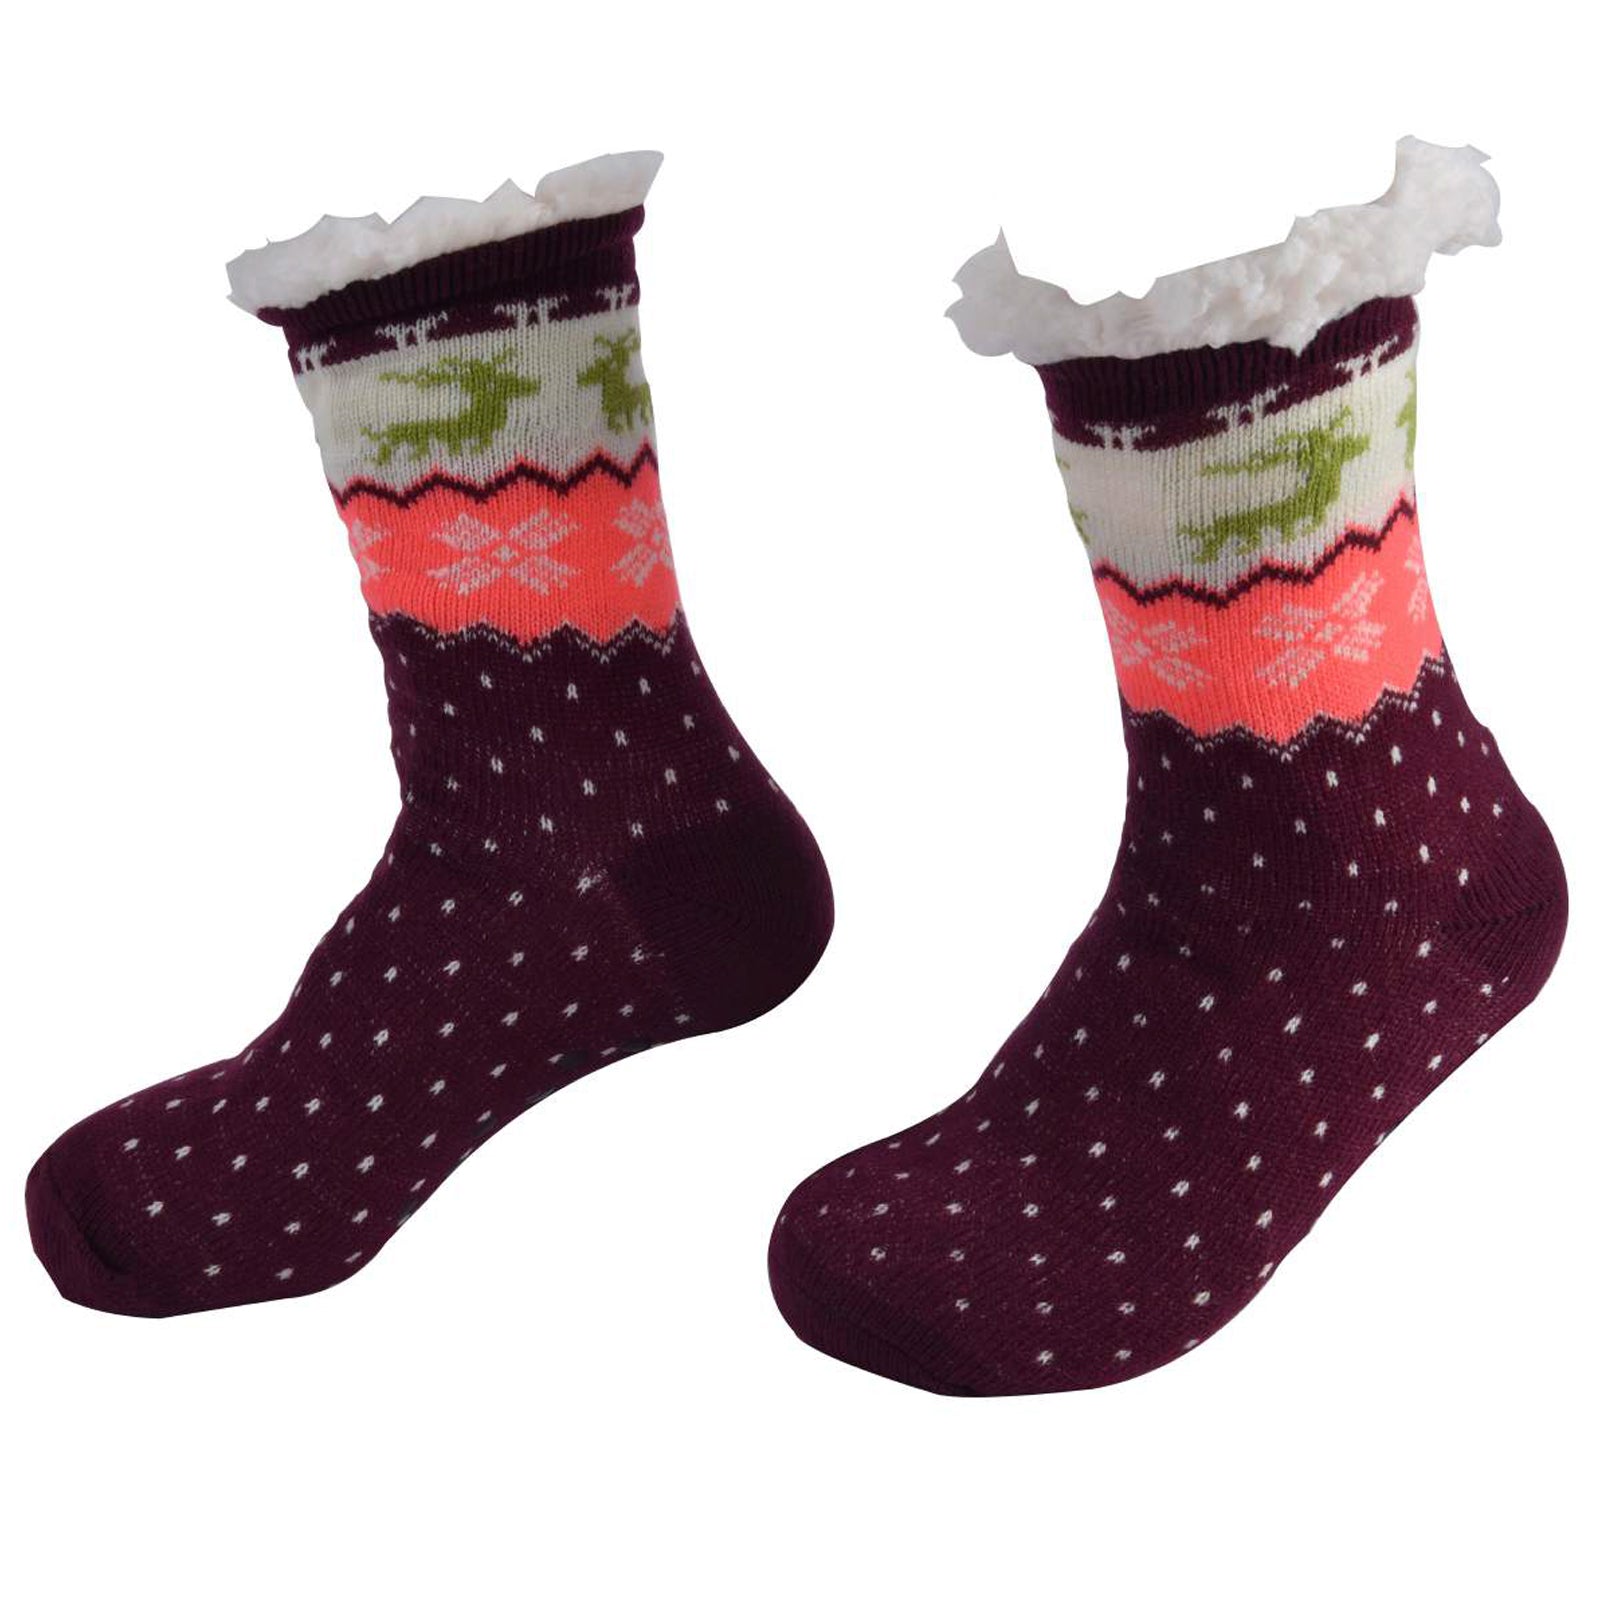 AMOS Ladies Christmas Slipper Socks